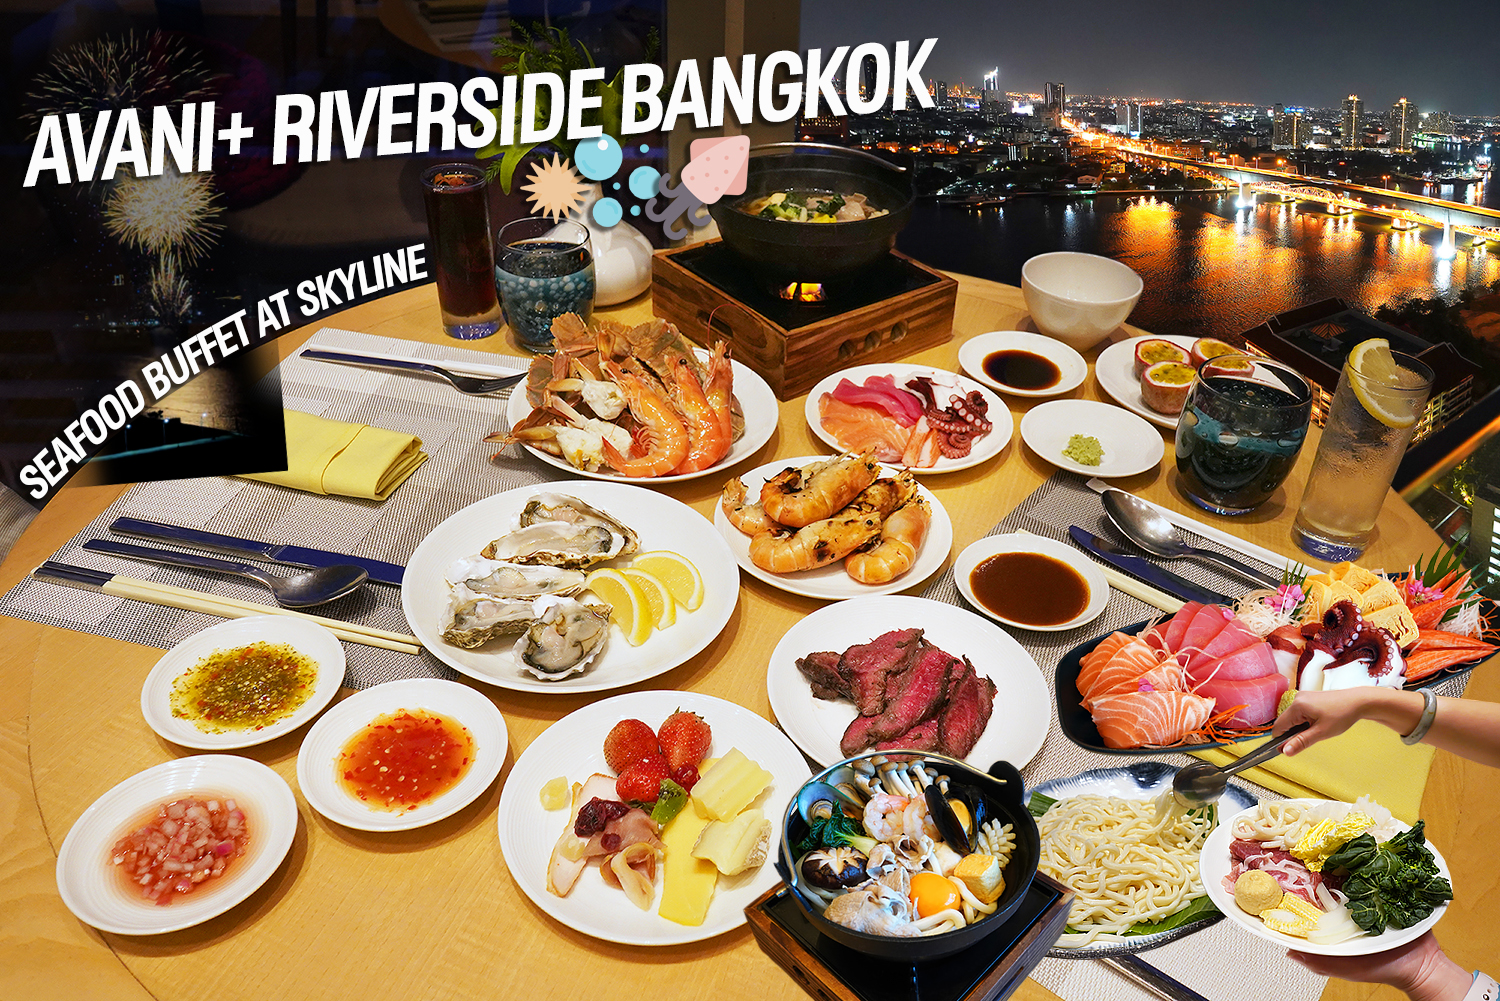 Avani Plus Riverside Bangkok SEAFOOD BUFFET AT SKYLINE 0